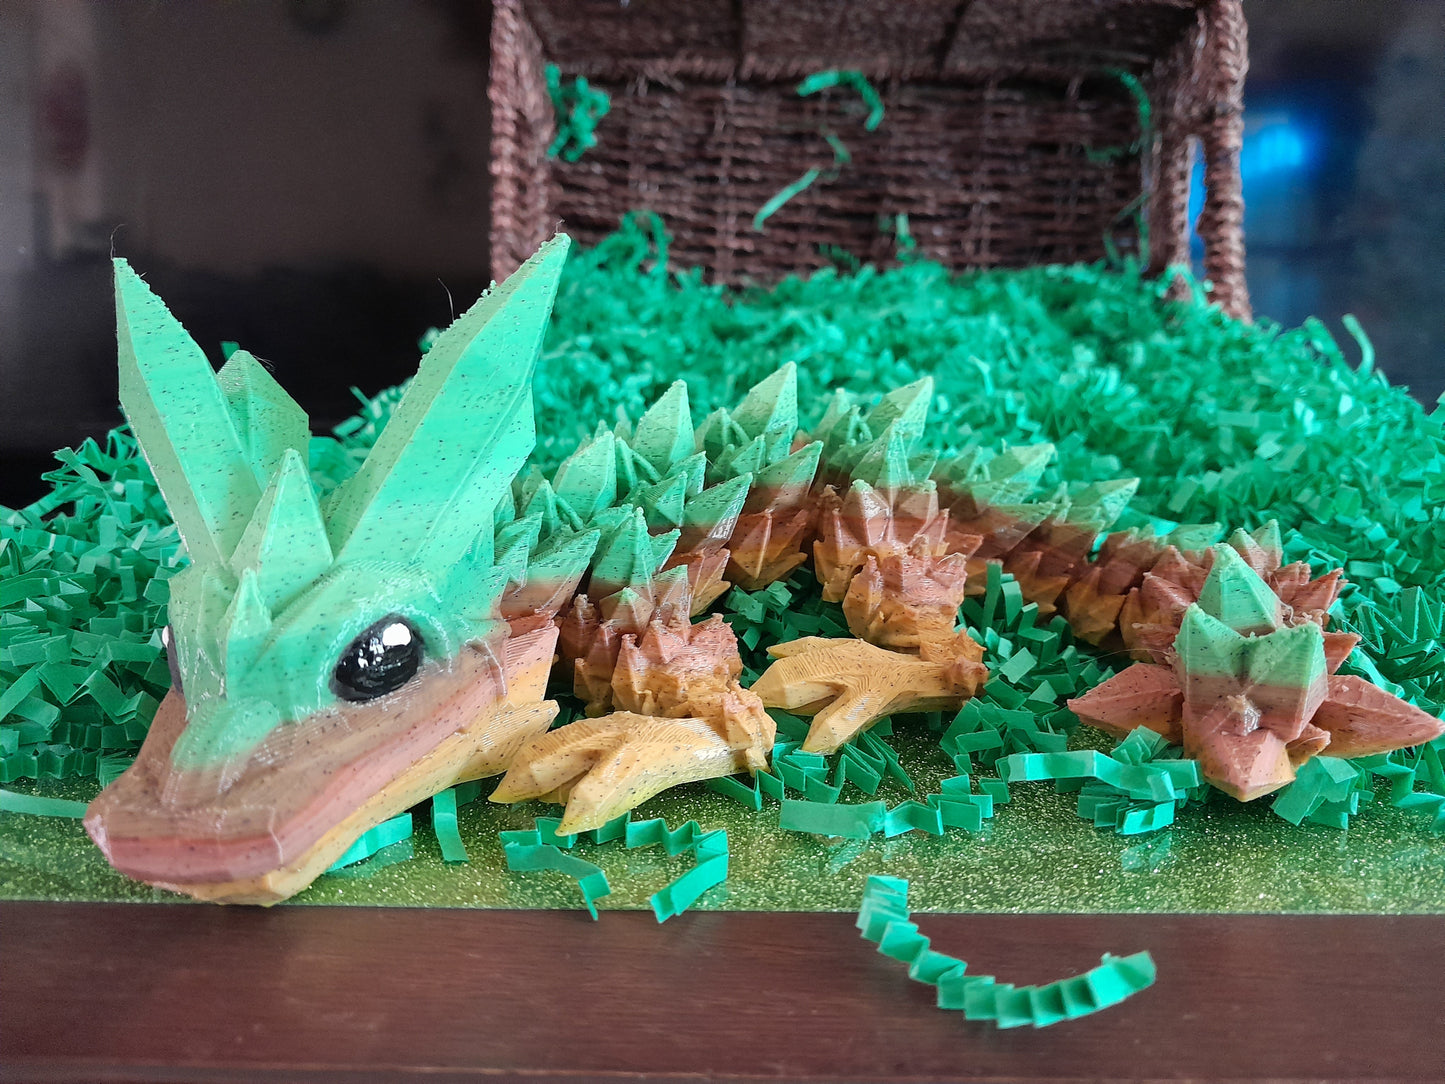 Medium 3D Printed Crystal Dragon